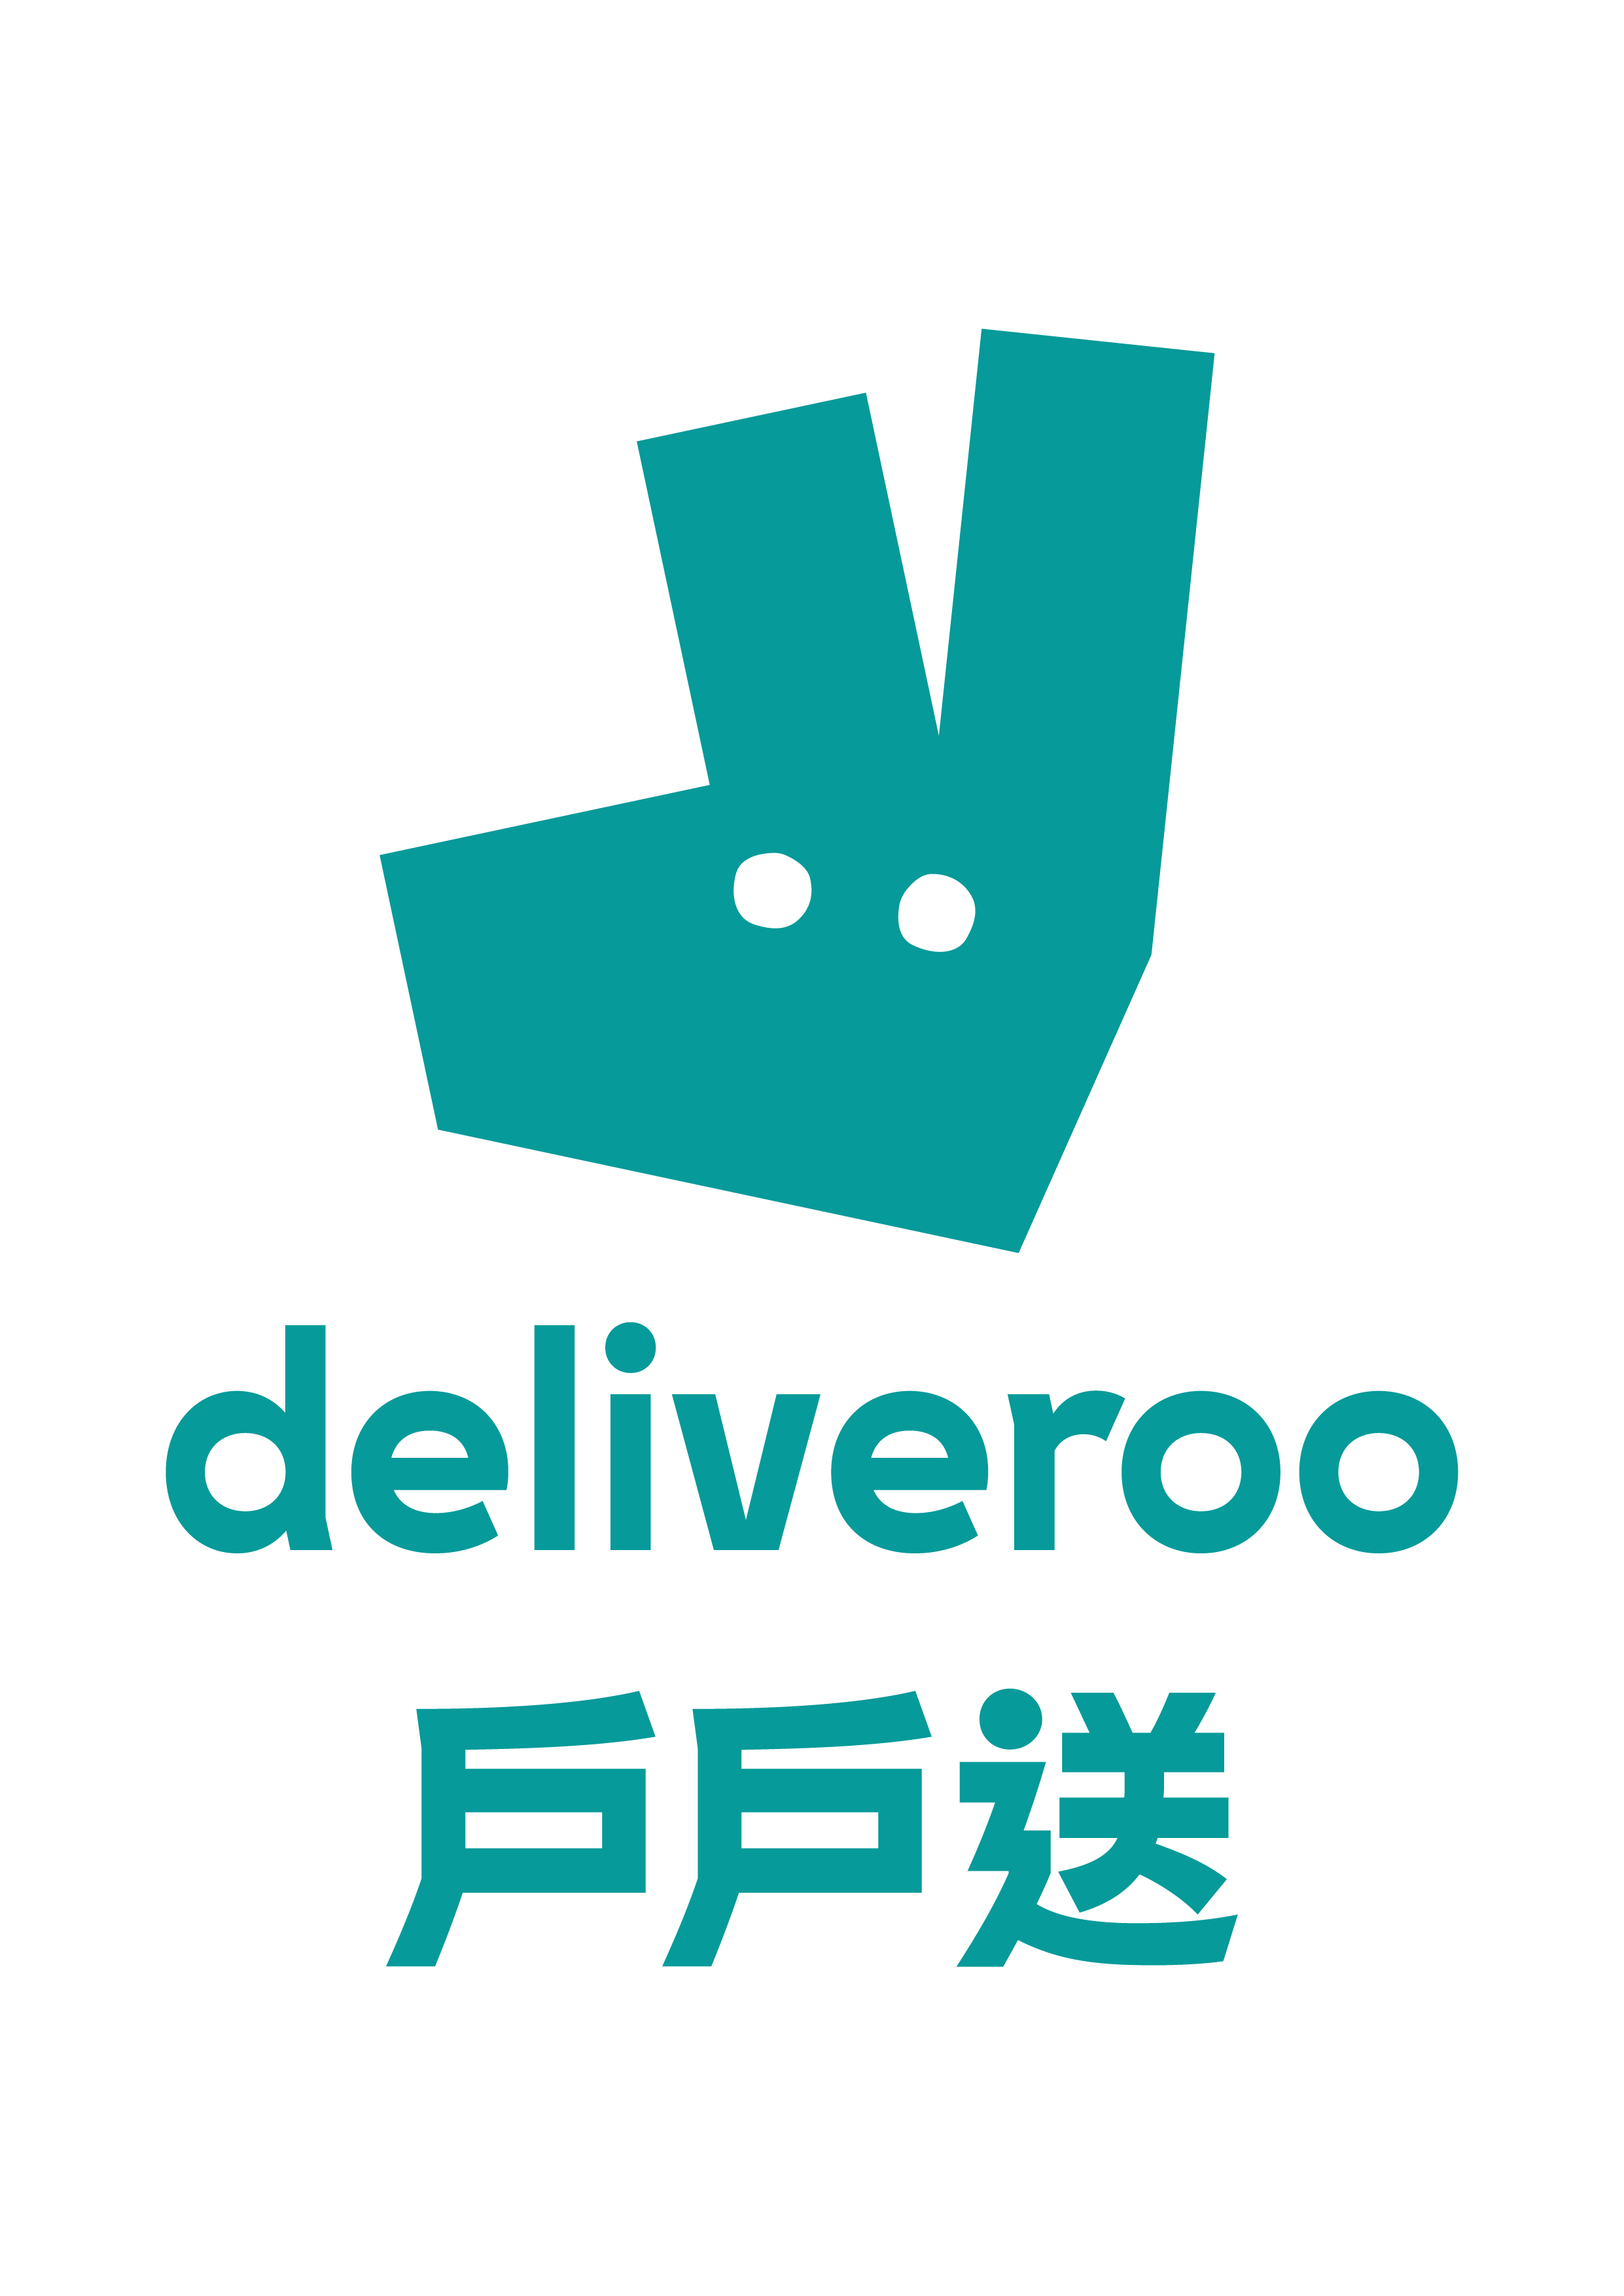 Deliveroo Plc